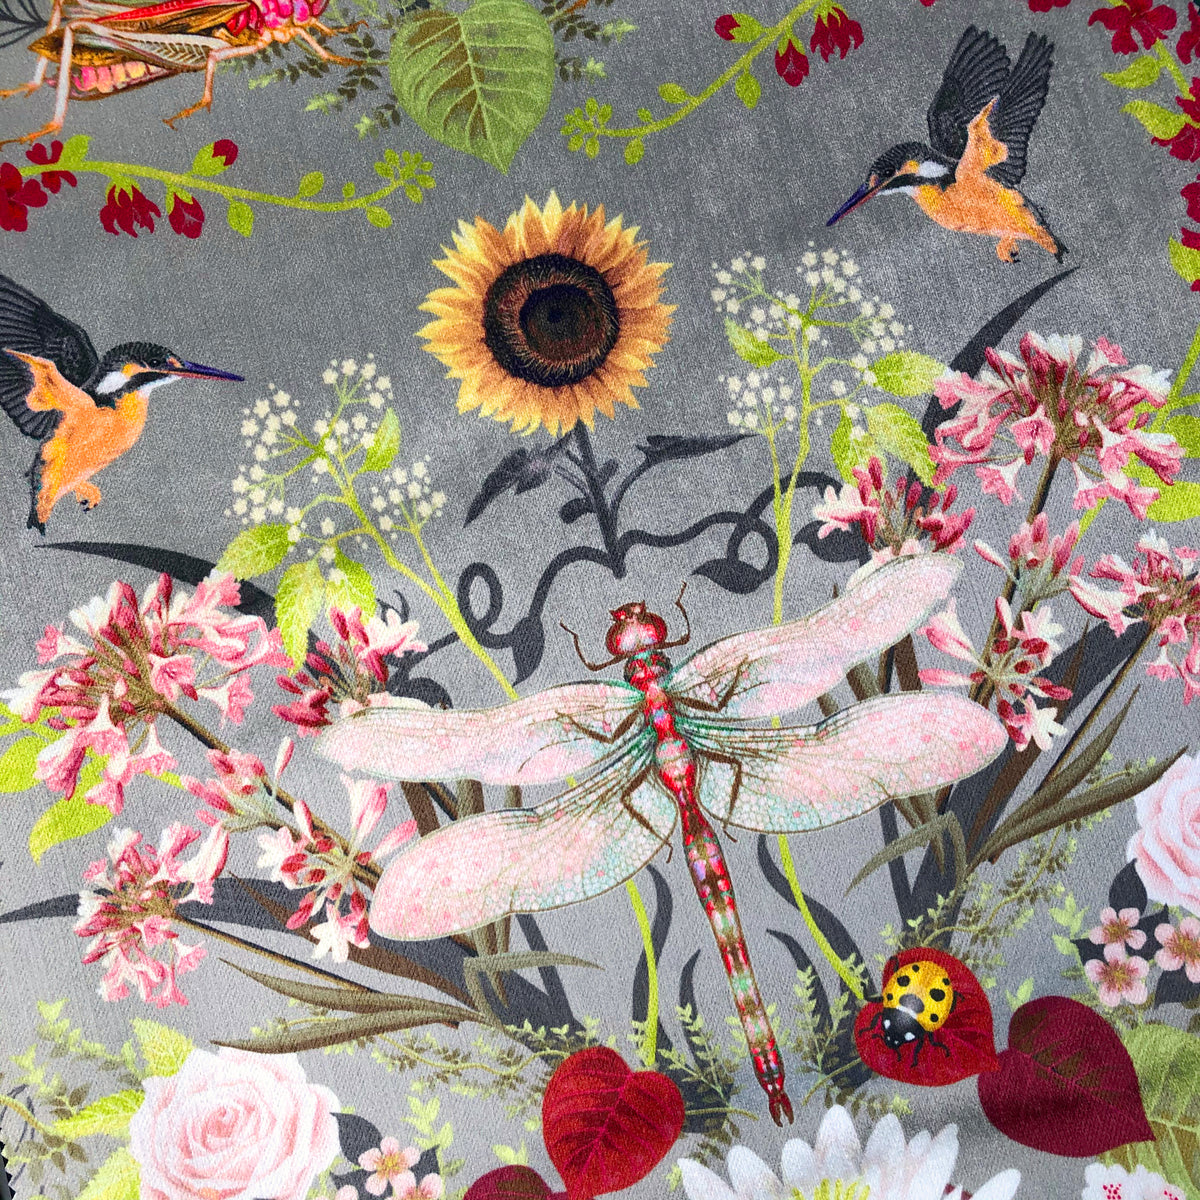 Garden Treasures in Spring | Pink & Grey Patterned Velvet Fabric